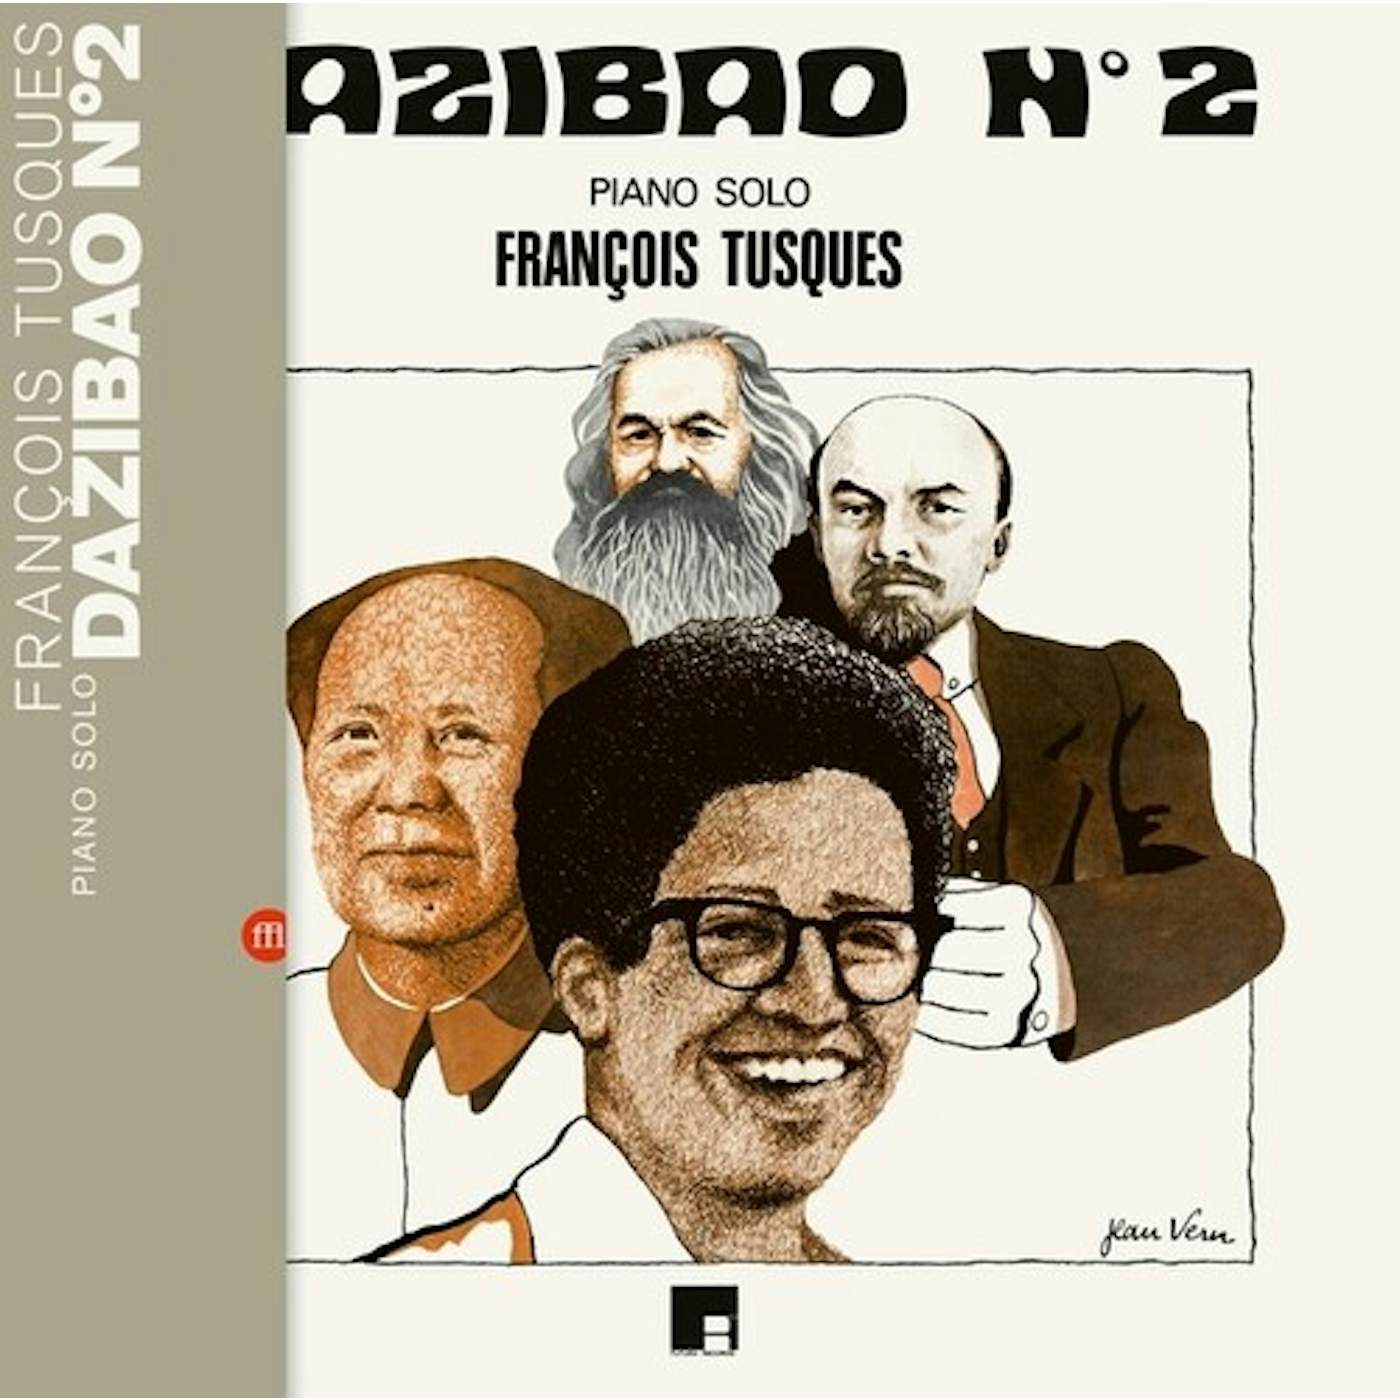 François Tusques DAZIBAO N2 Vinyl Record